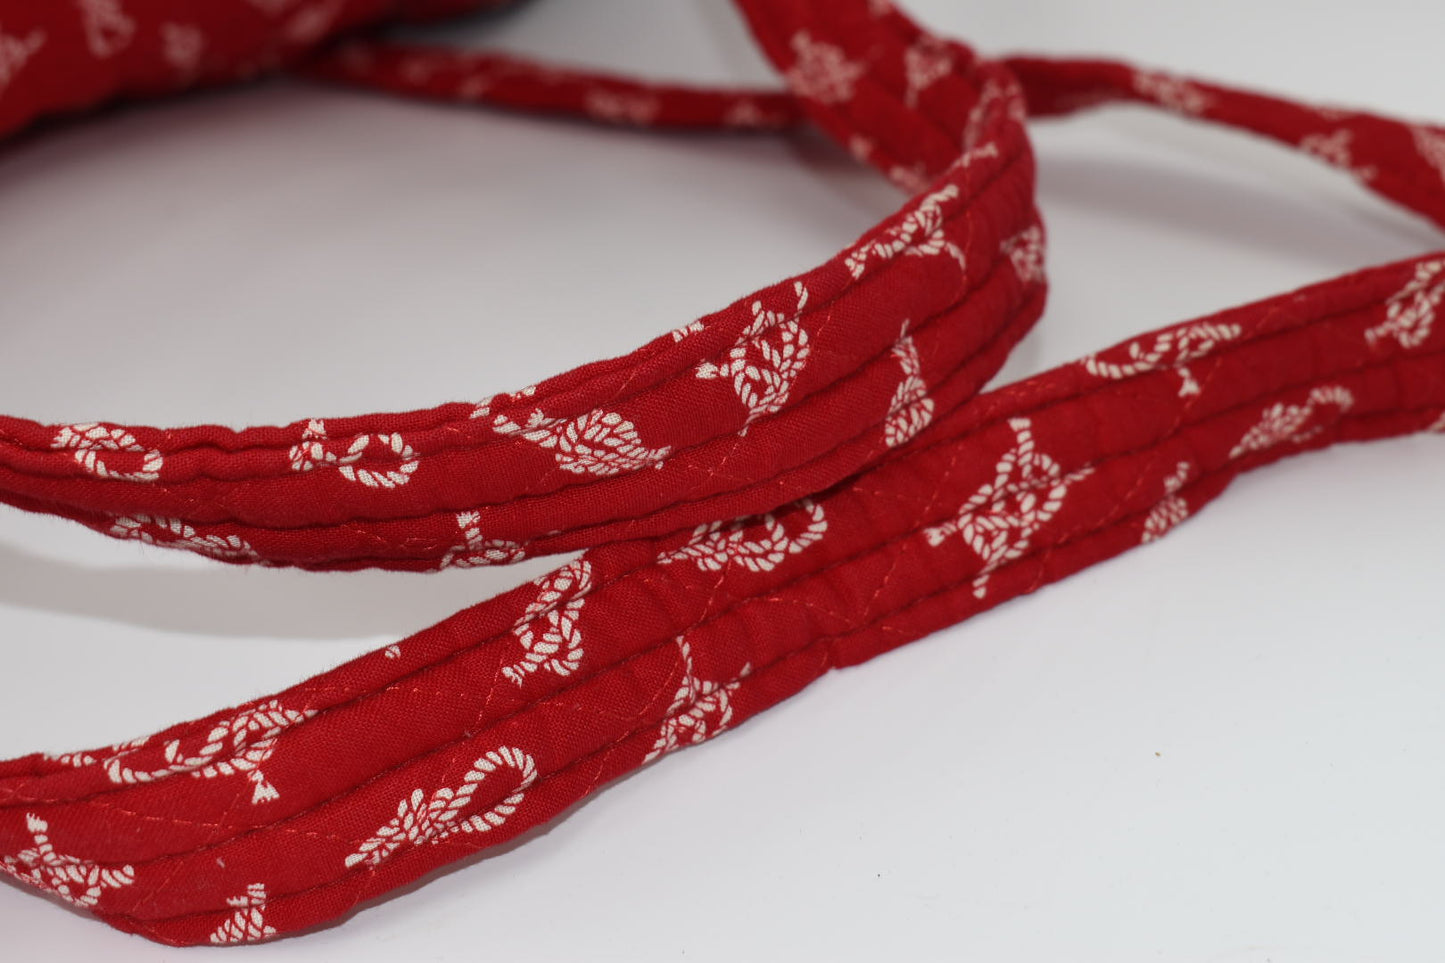 Vera Bradley Medium Duffel Bag in "Regatta Red Knots" Pattern